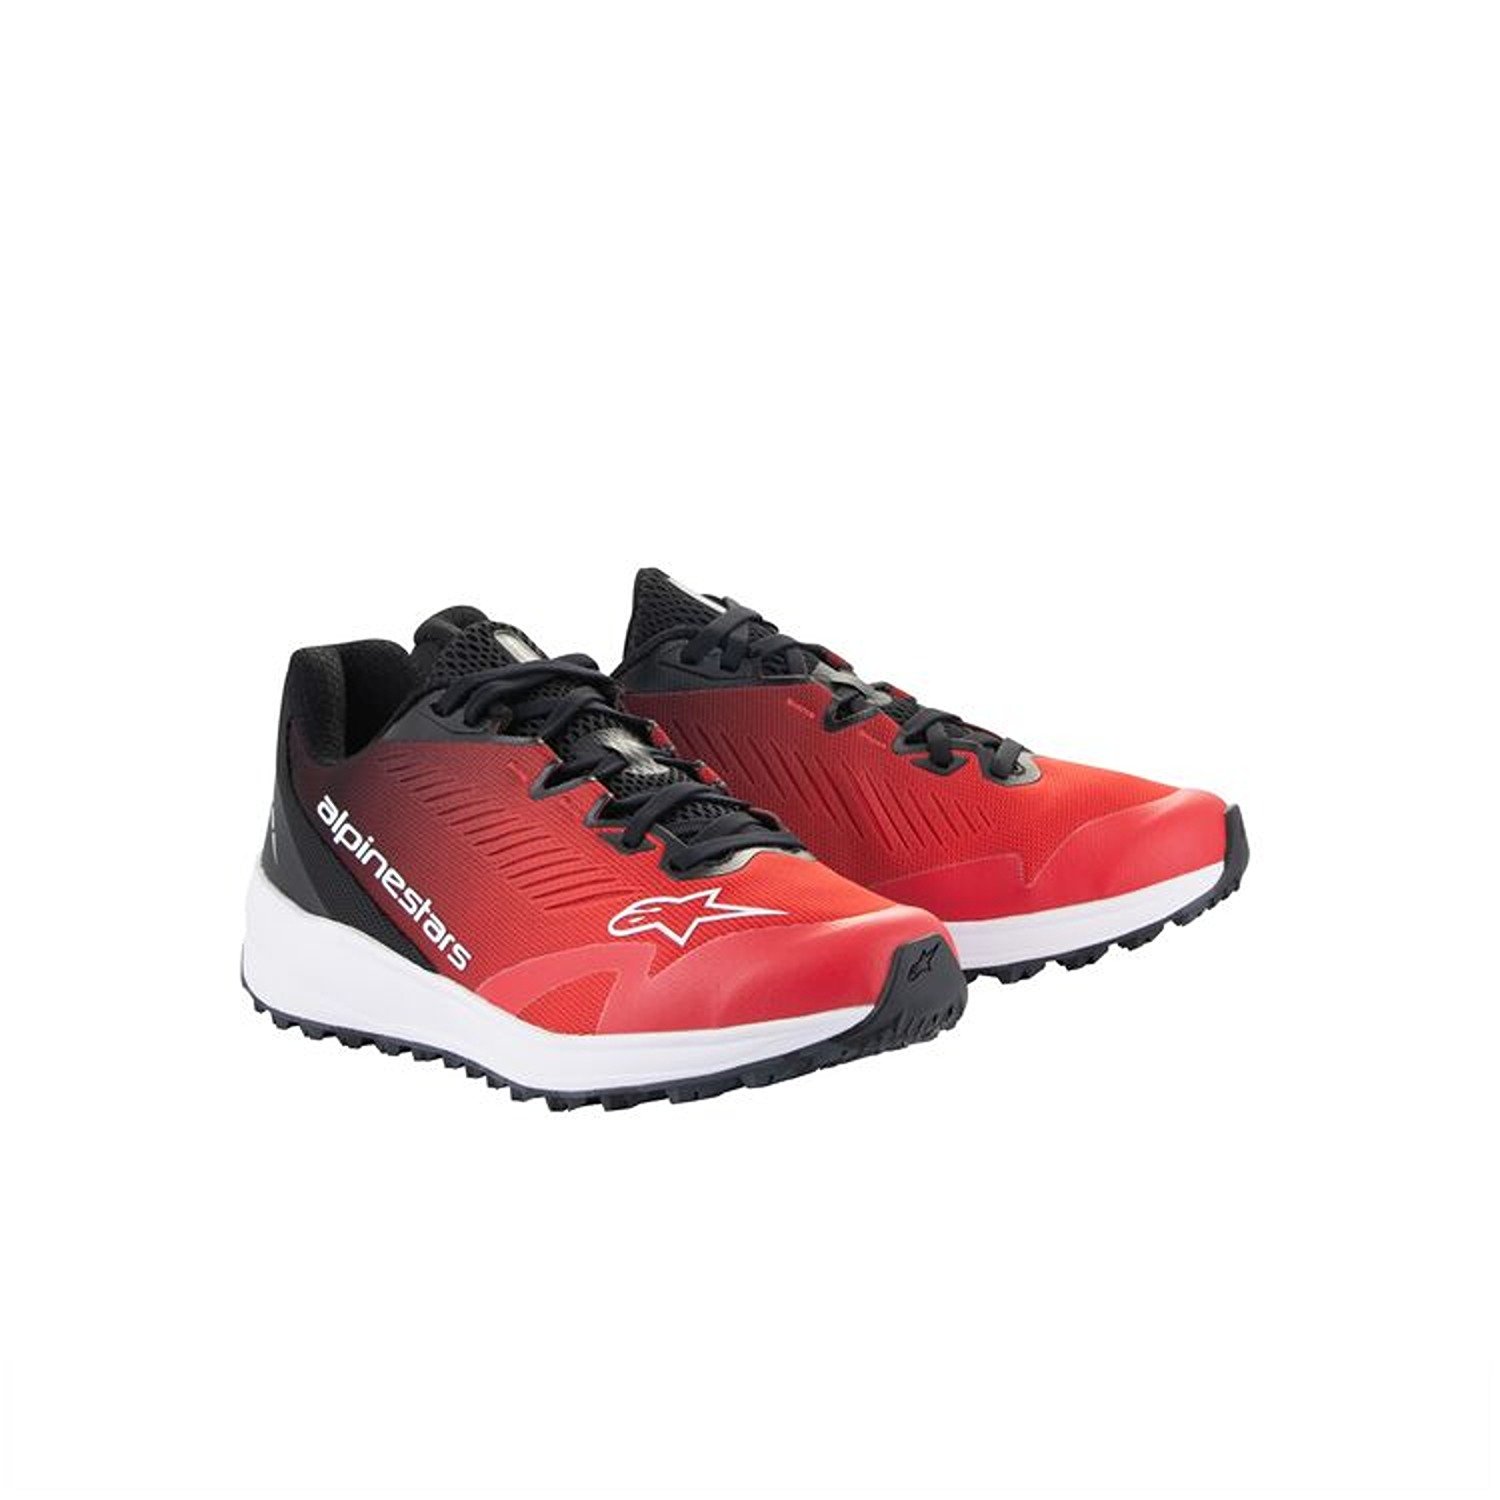 Image of Alpinestars Meta Road V2 Shoes Red Black White Size US 135 EN